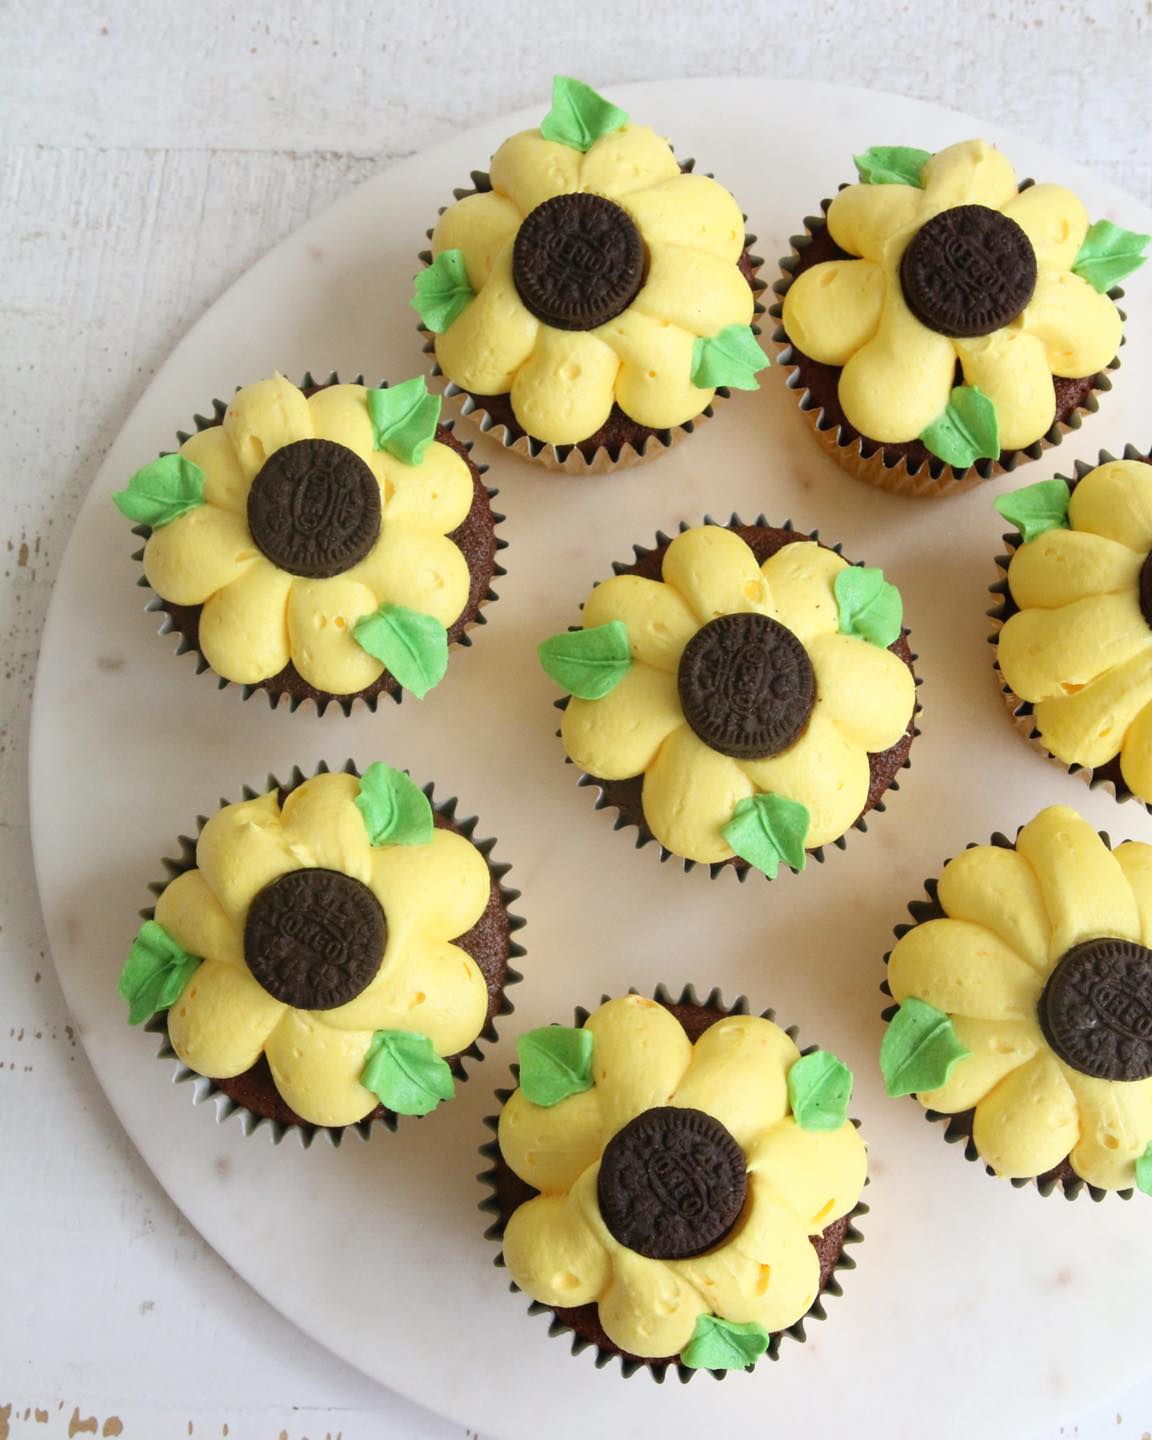 Sunflower Cupcakes